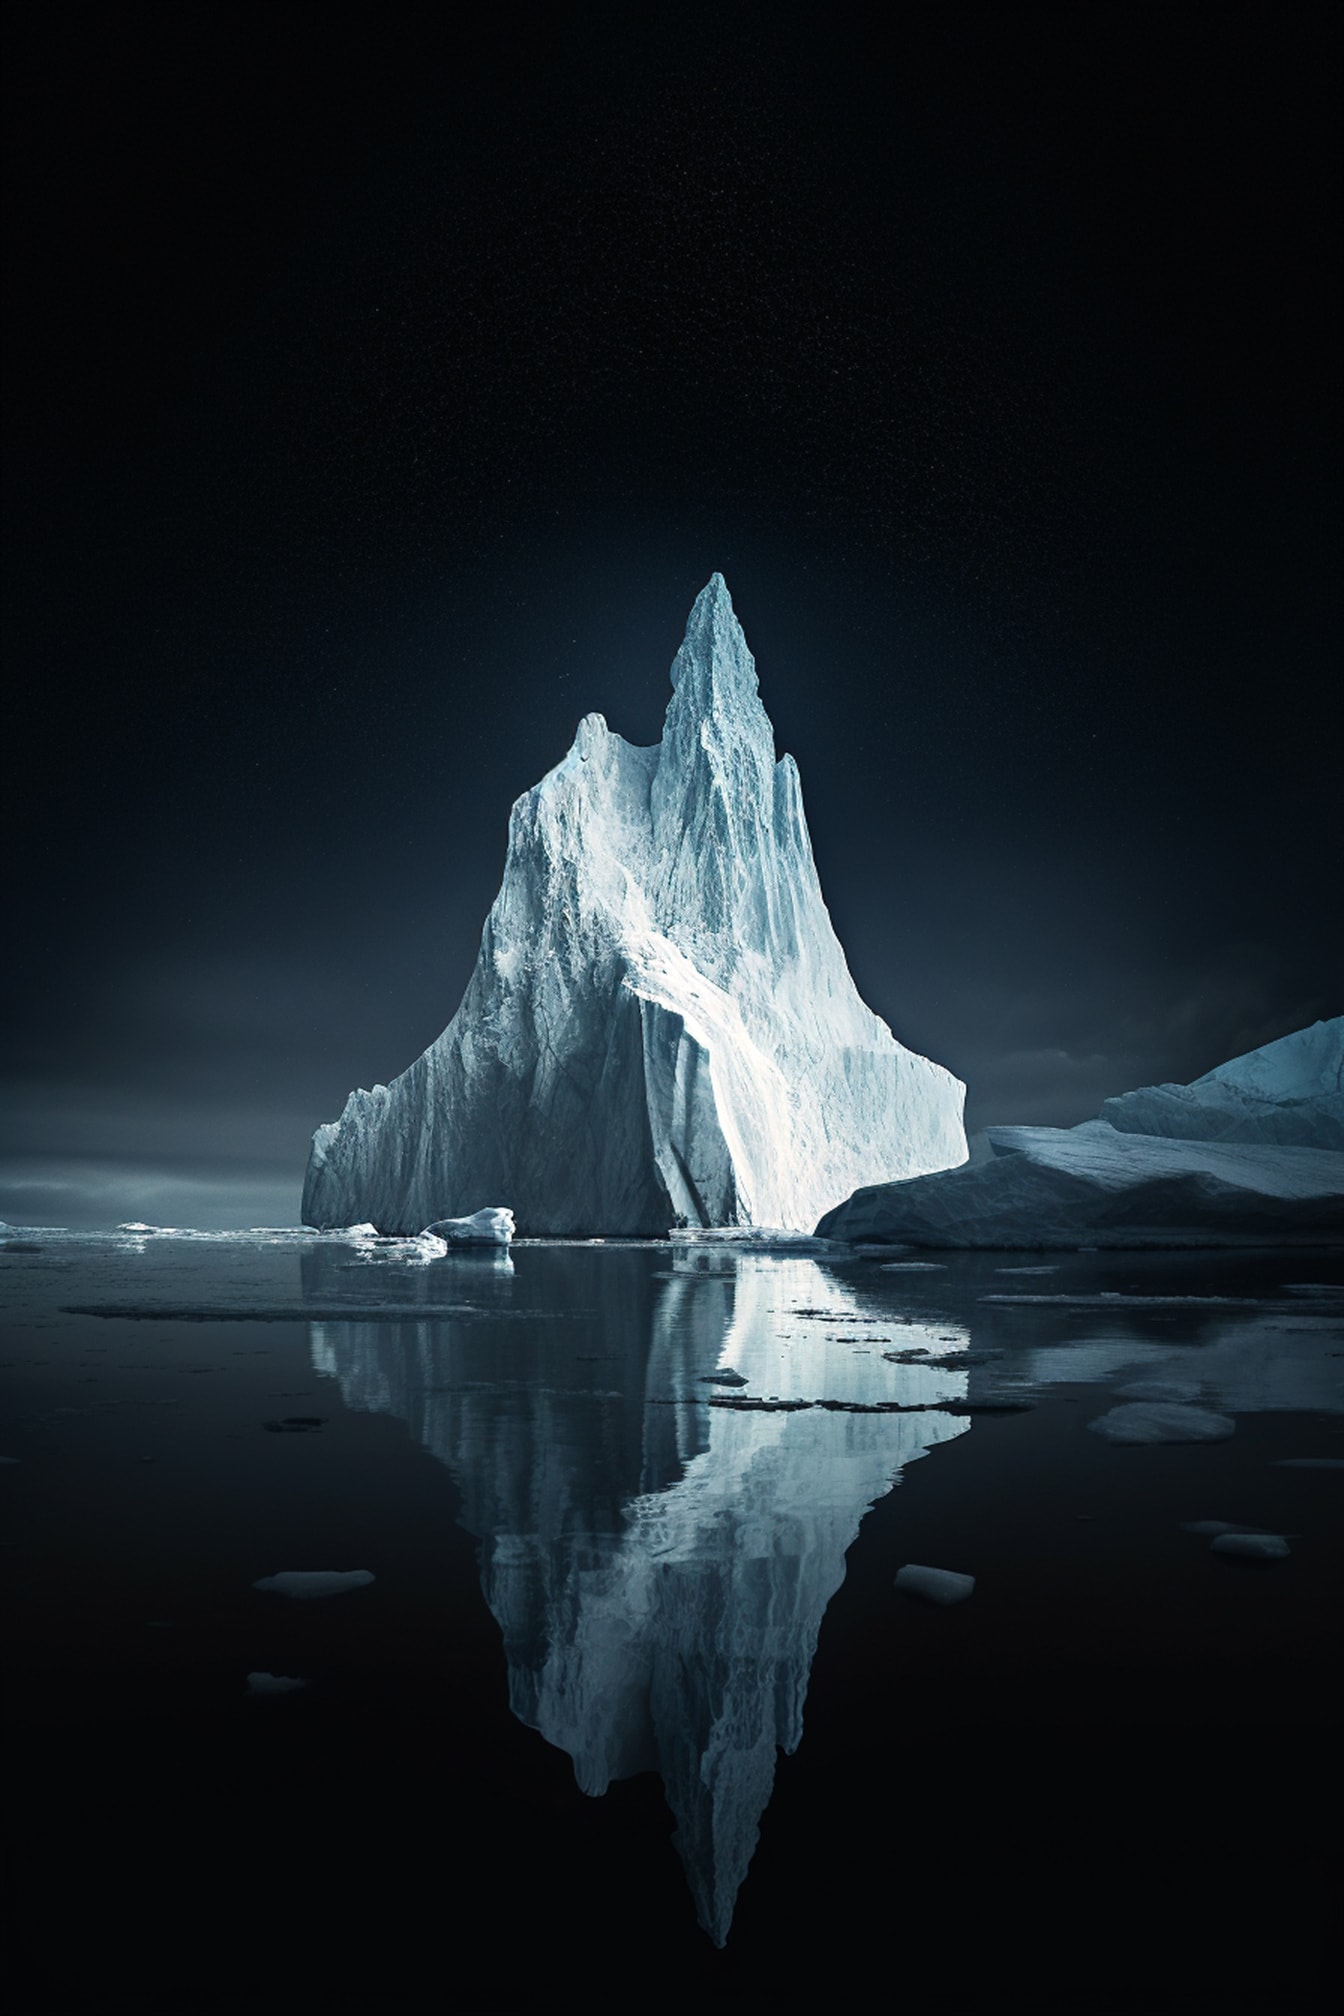 Mörk natt på Arktis med isberg grafisk illsutration